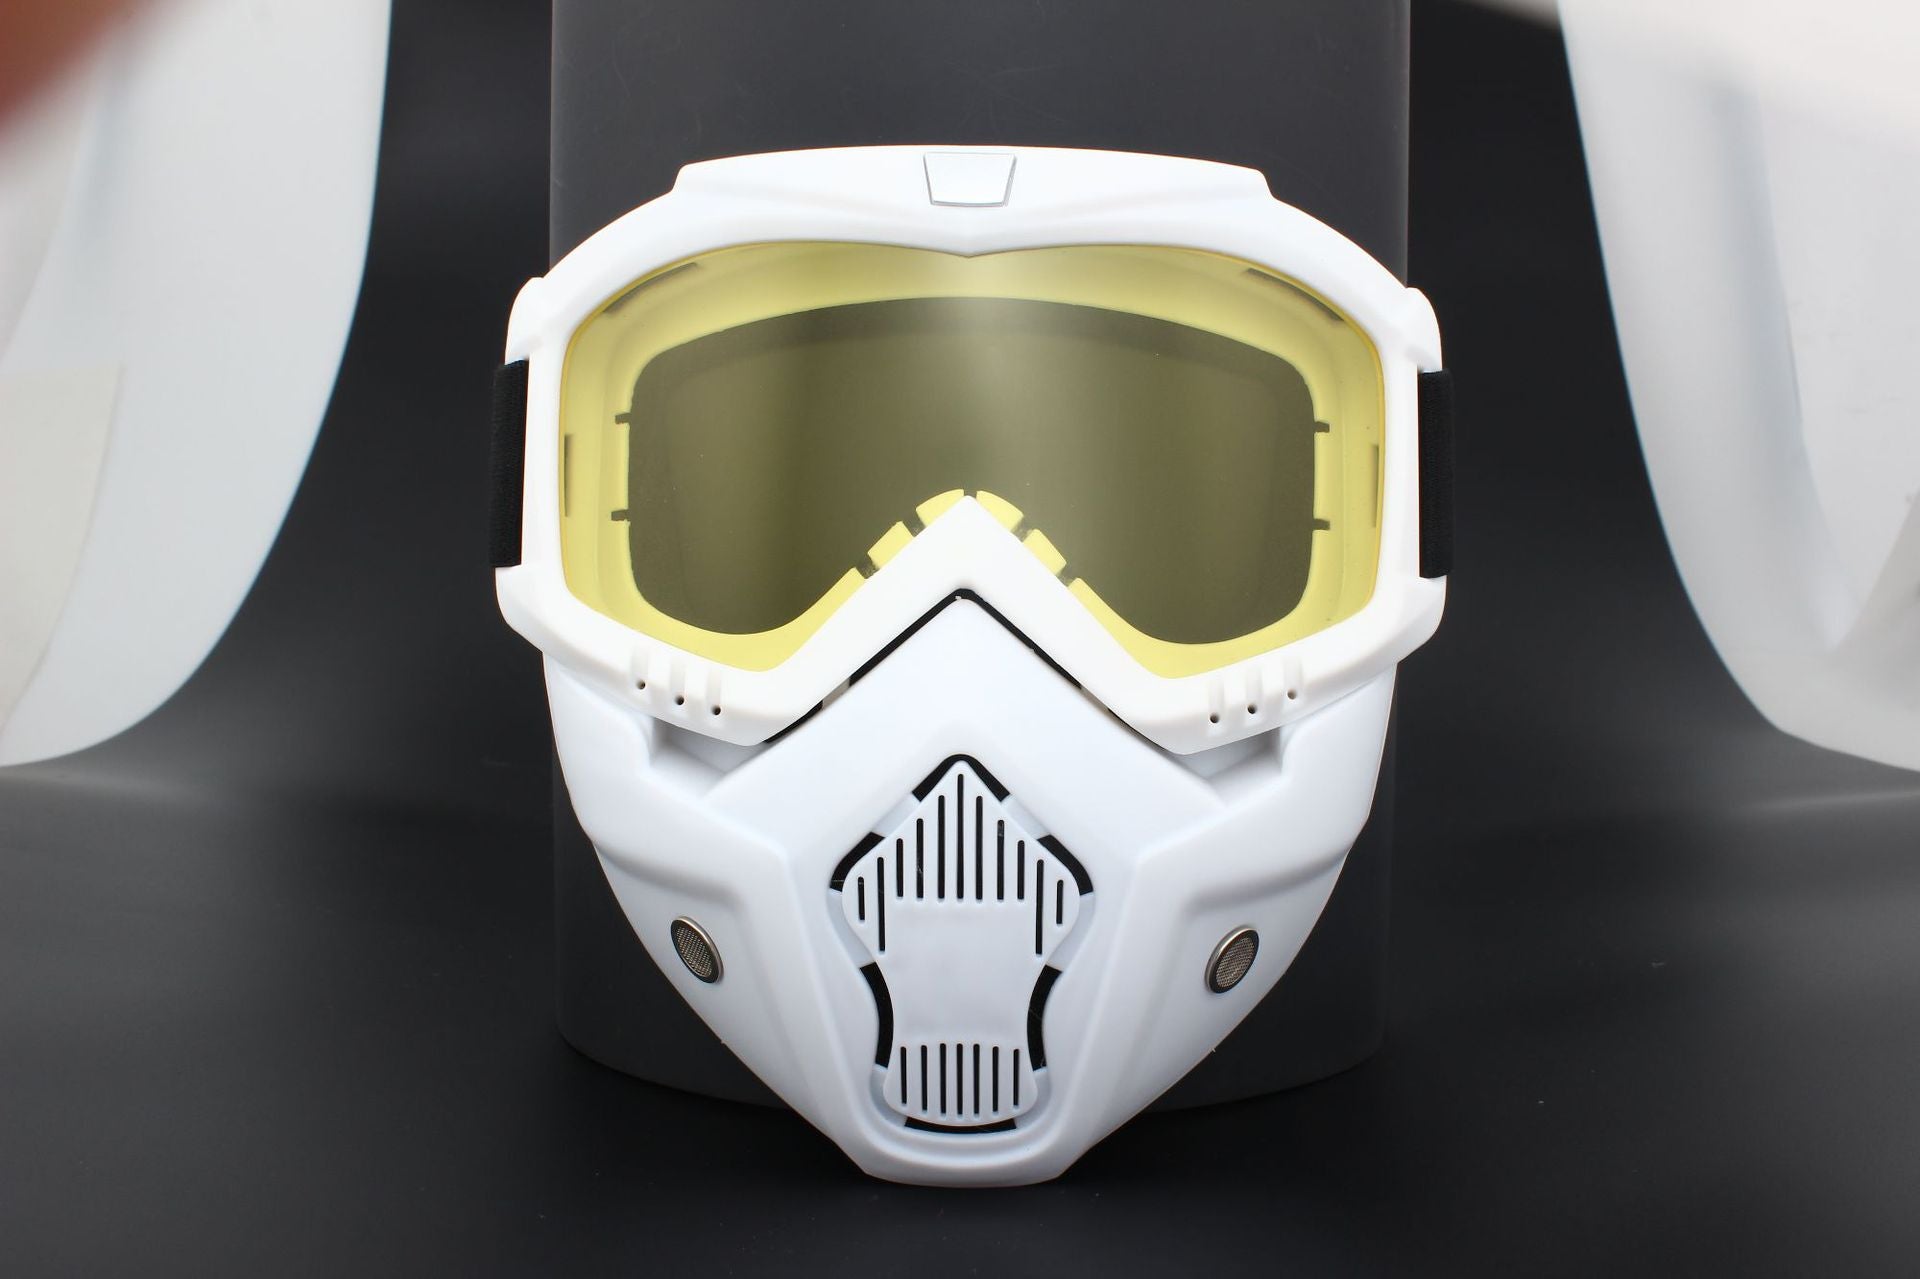 Ski Wind Protection Goggles